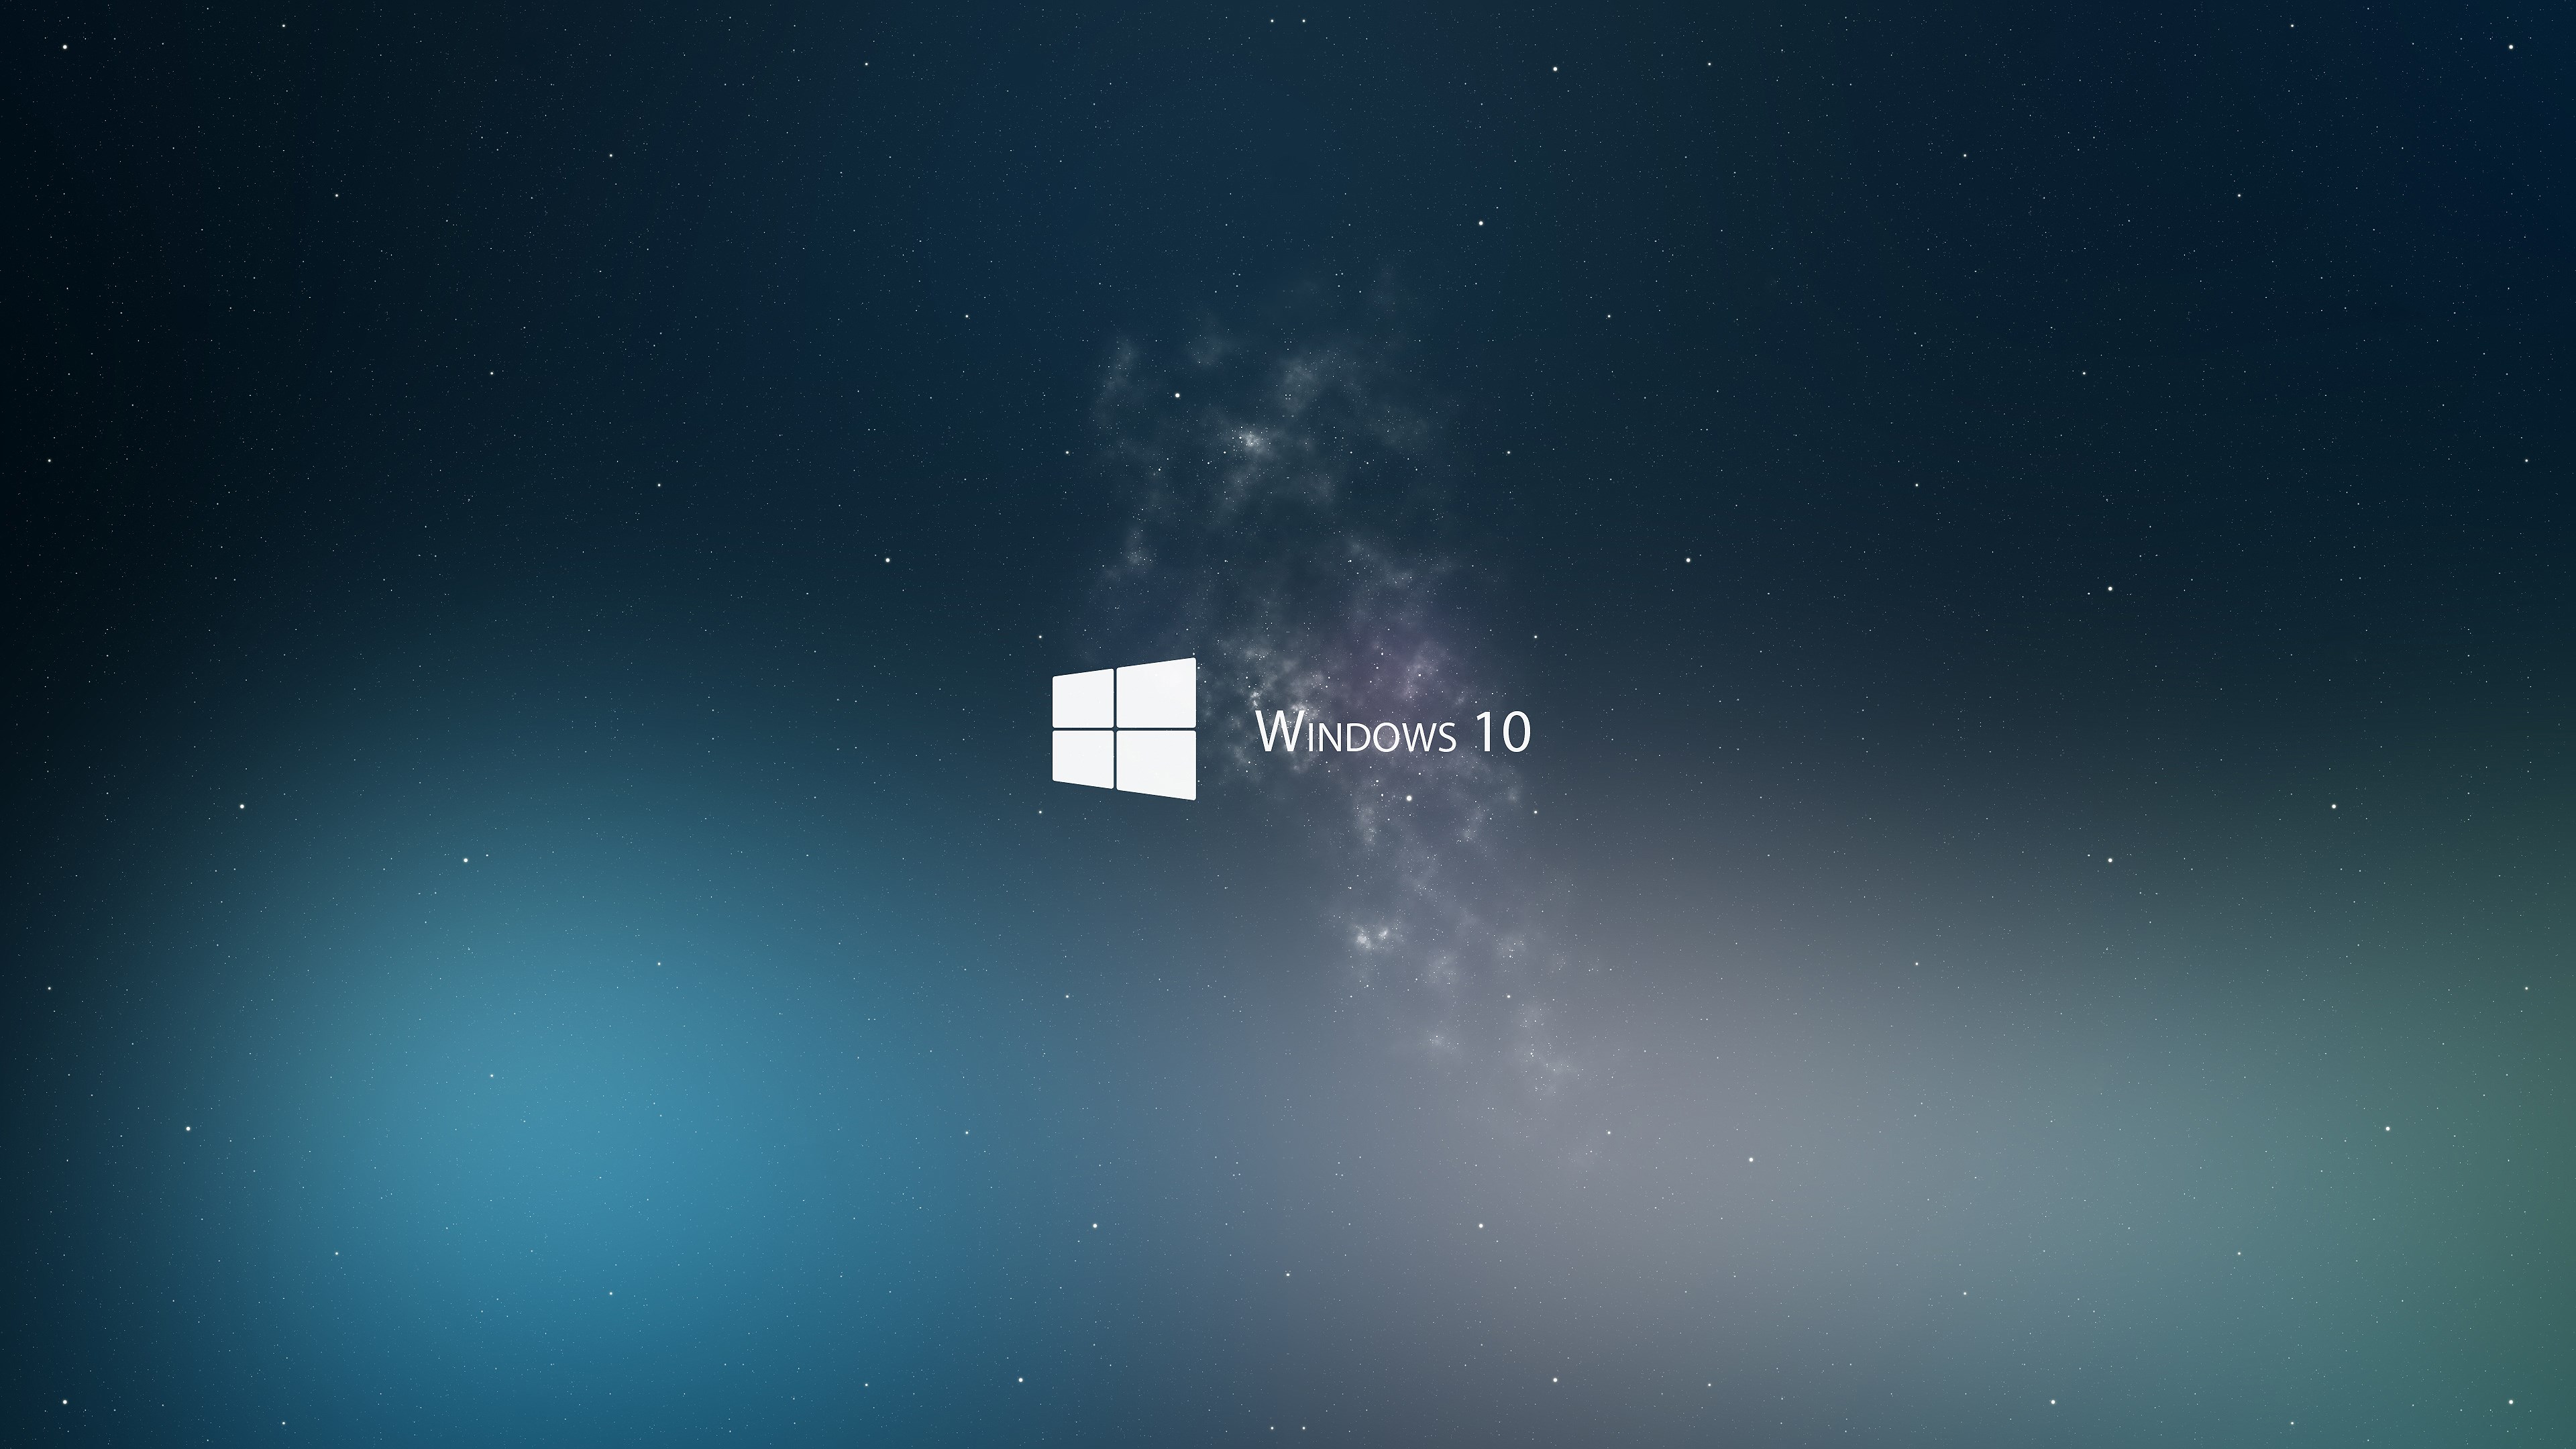 Windows 10 4K Wallpapers   Ultra HD Top 15 AxeeTech 3840x2160